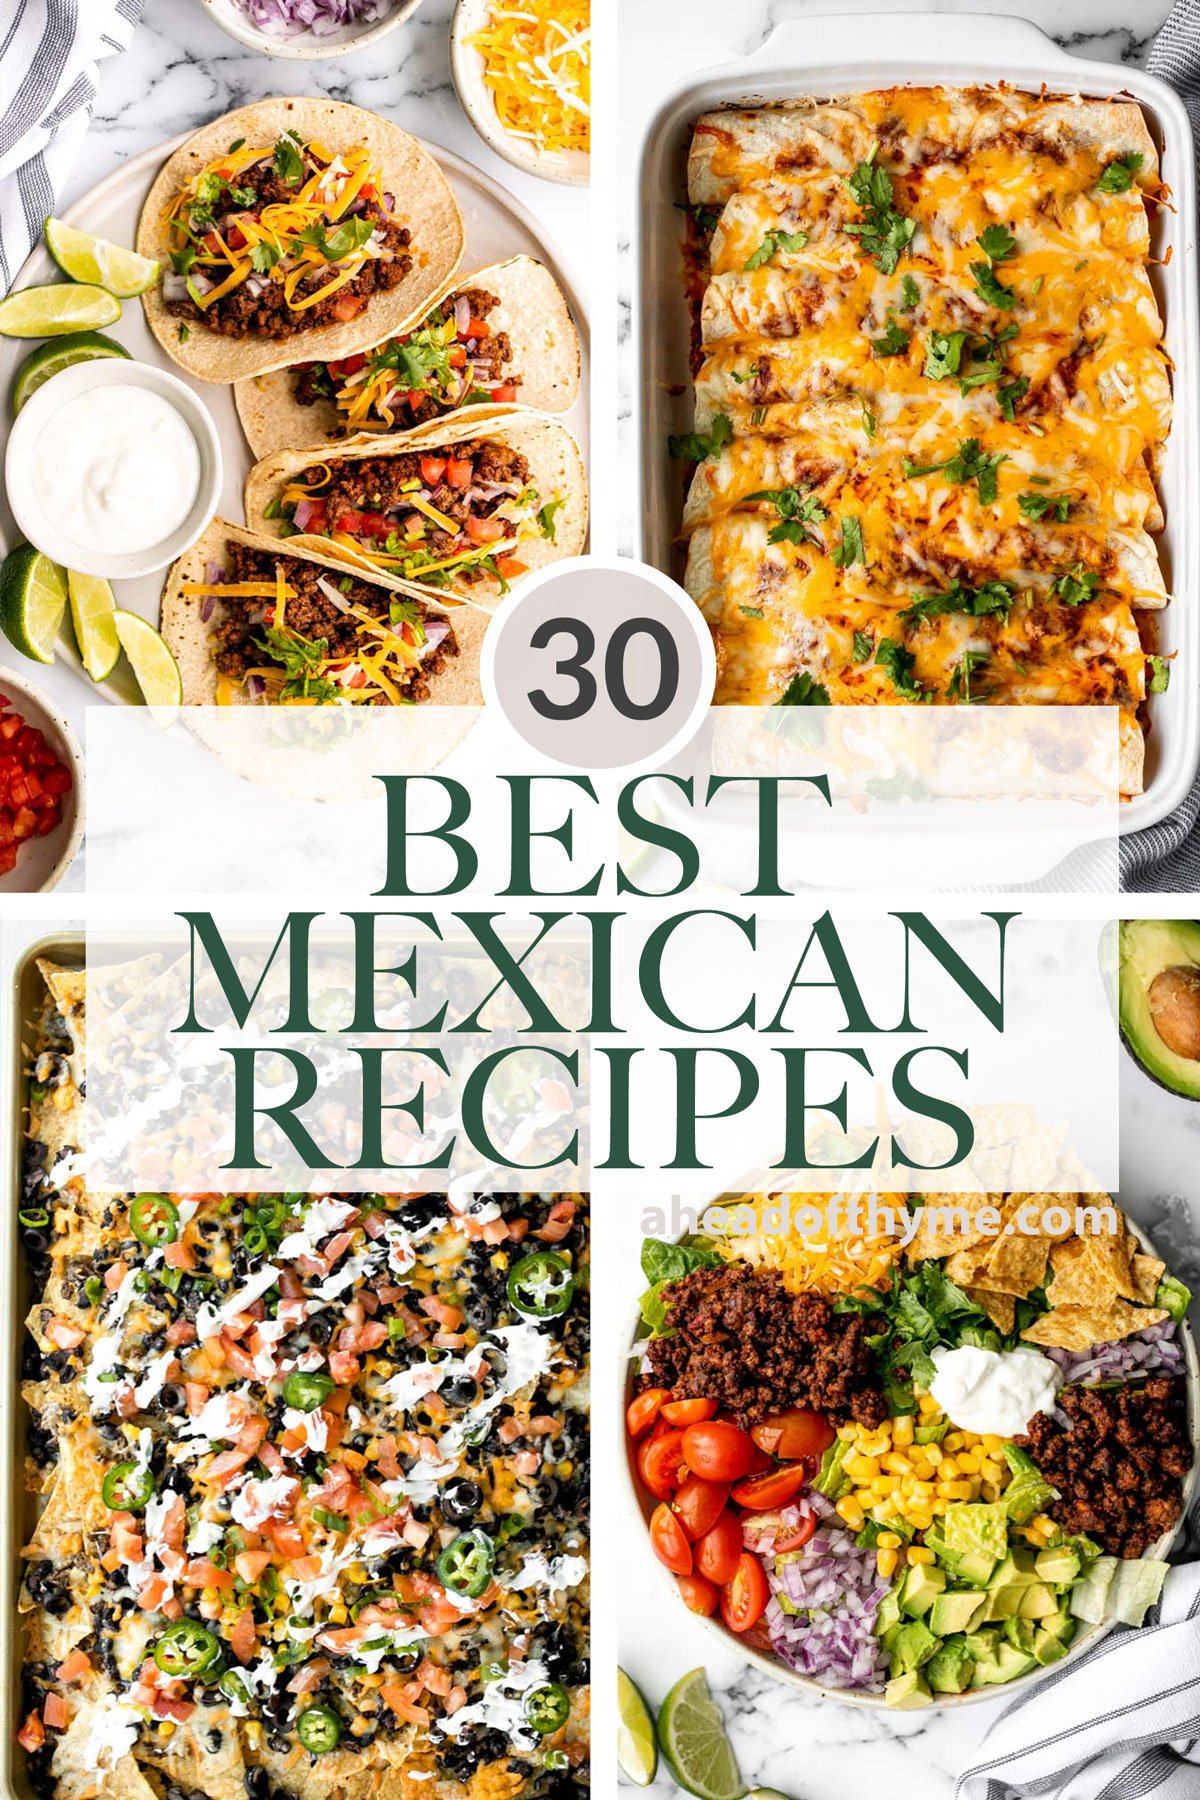 30 Mexican Recipes for Cinco de Mayo